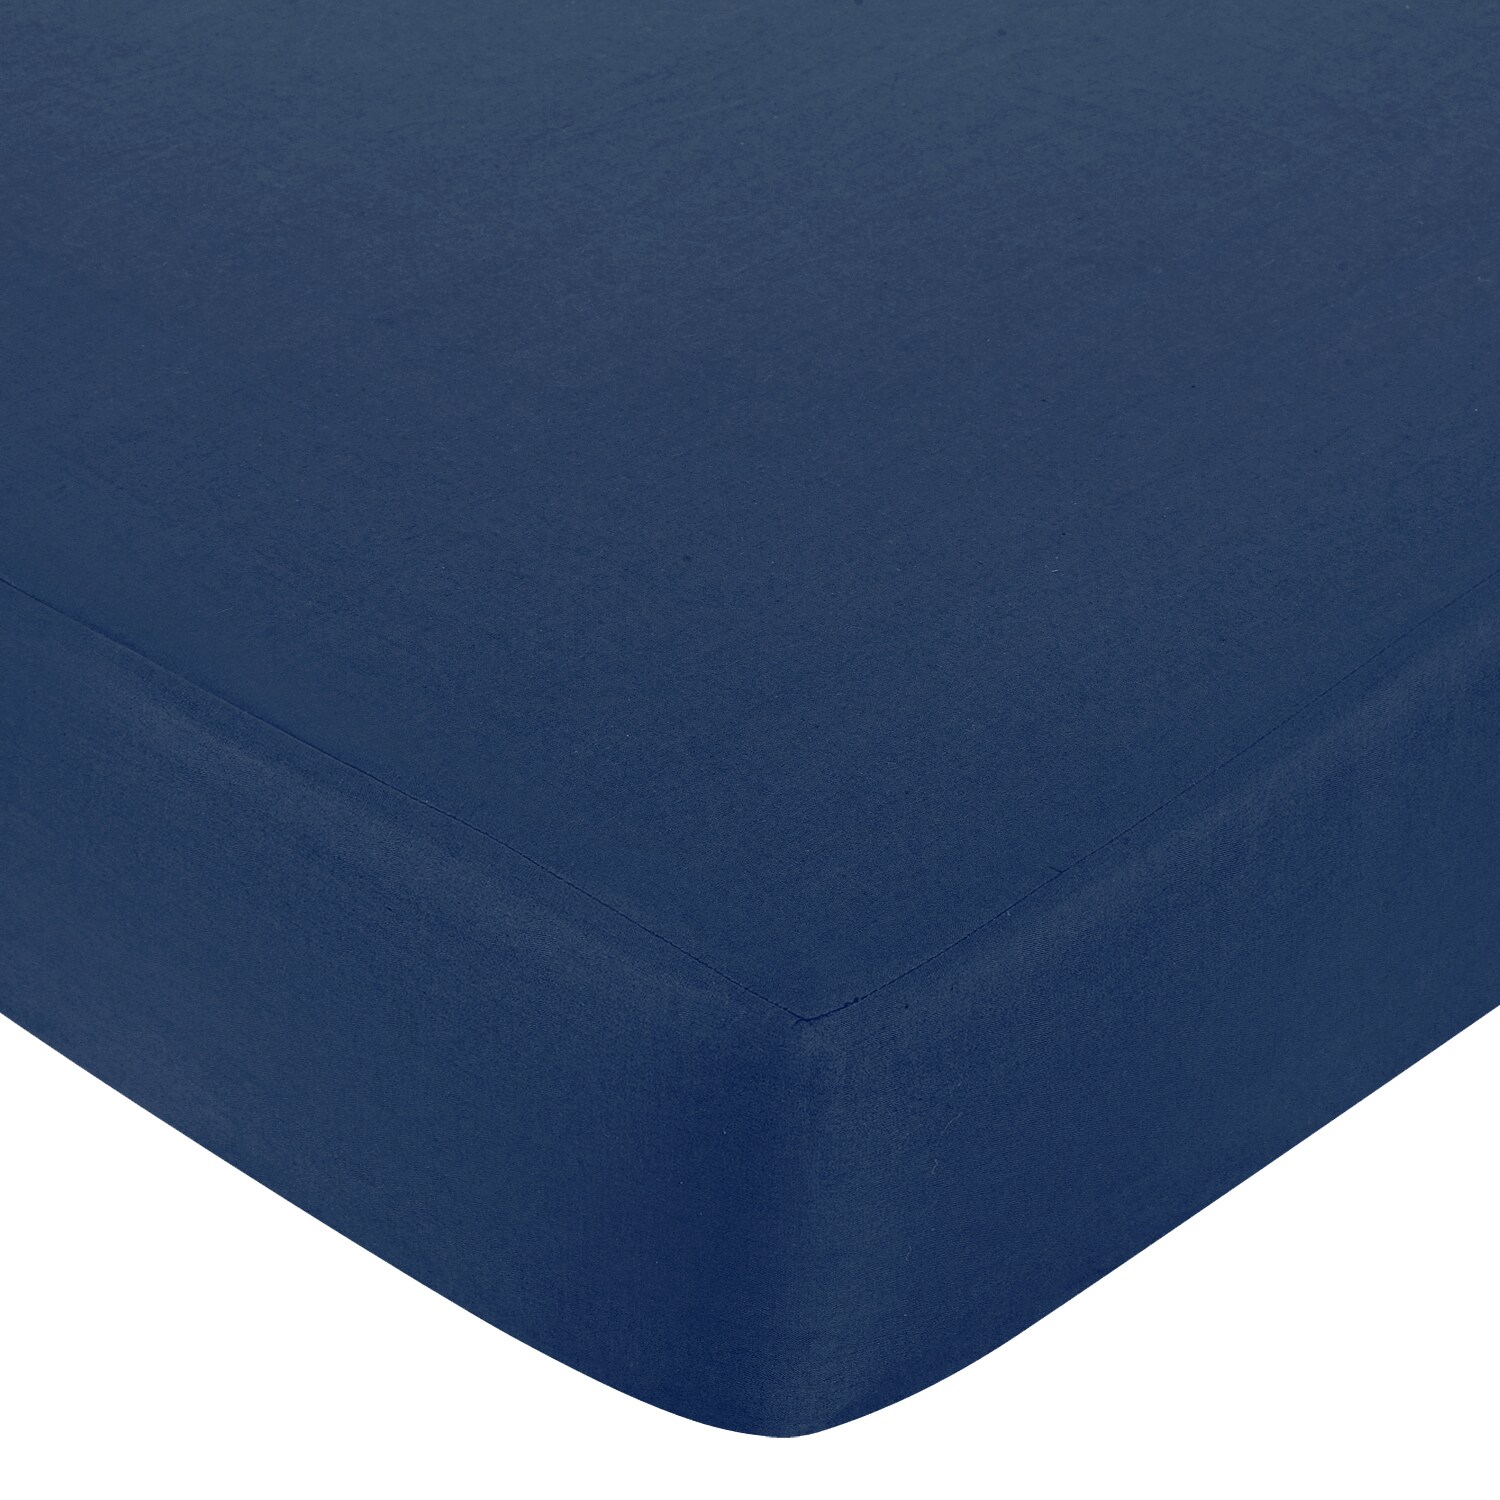 Sweet Jojo Designs Nautical Nights Navy Blue Fitted Crib Sheet